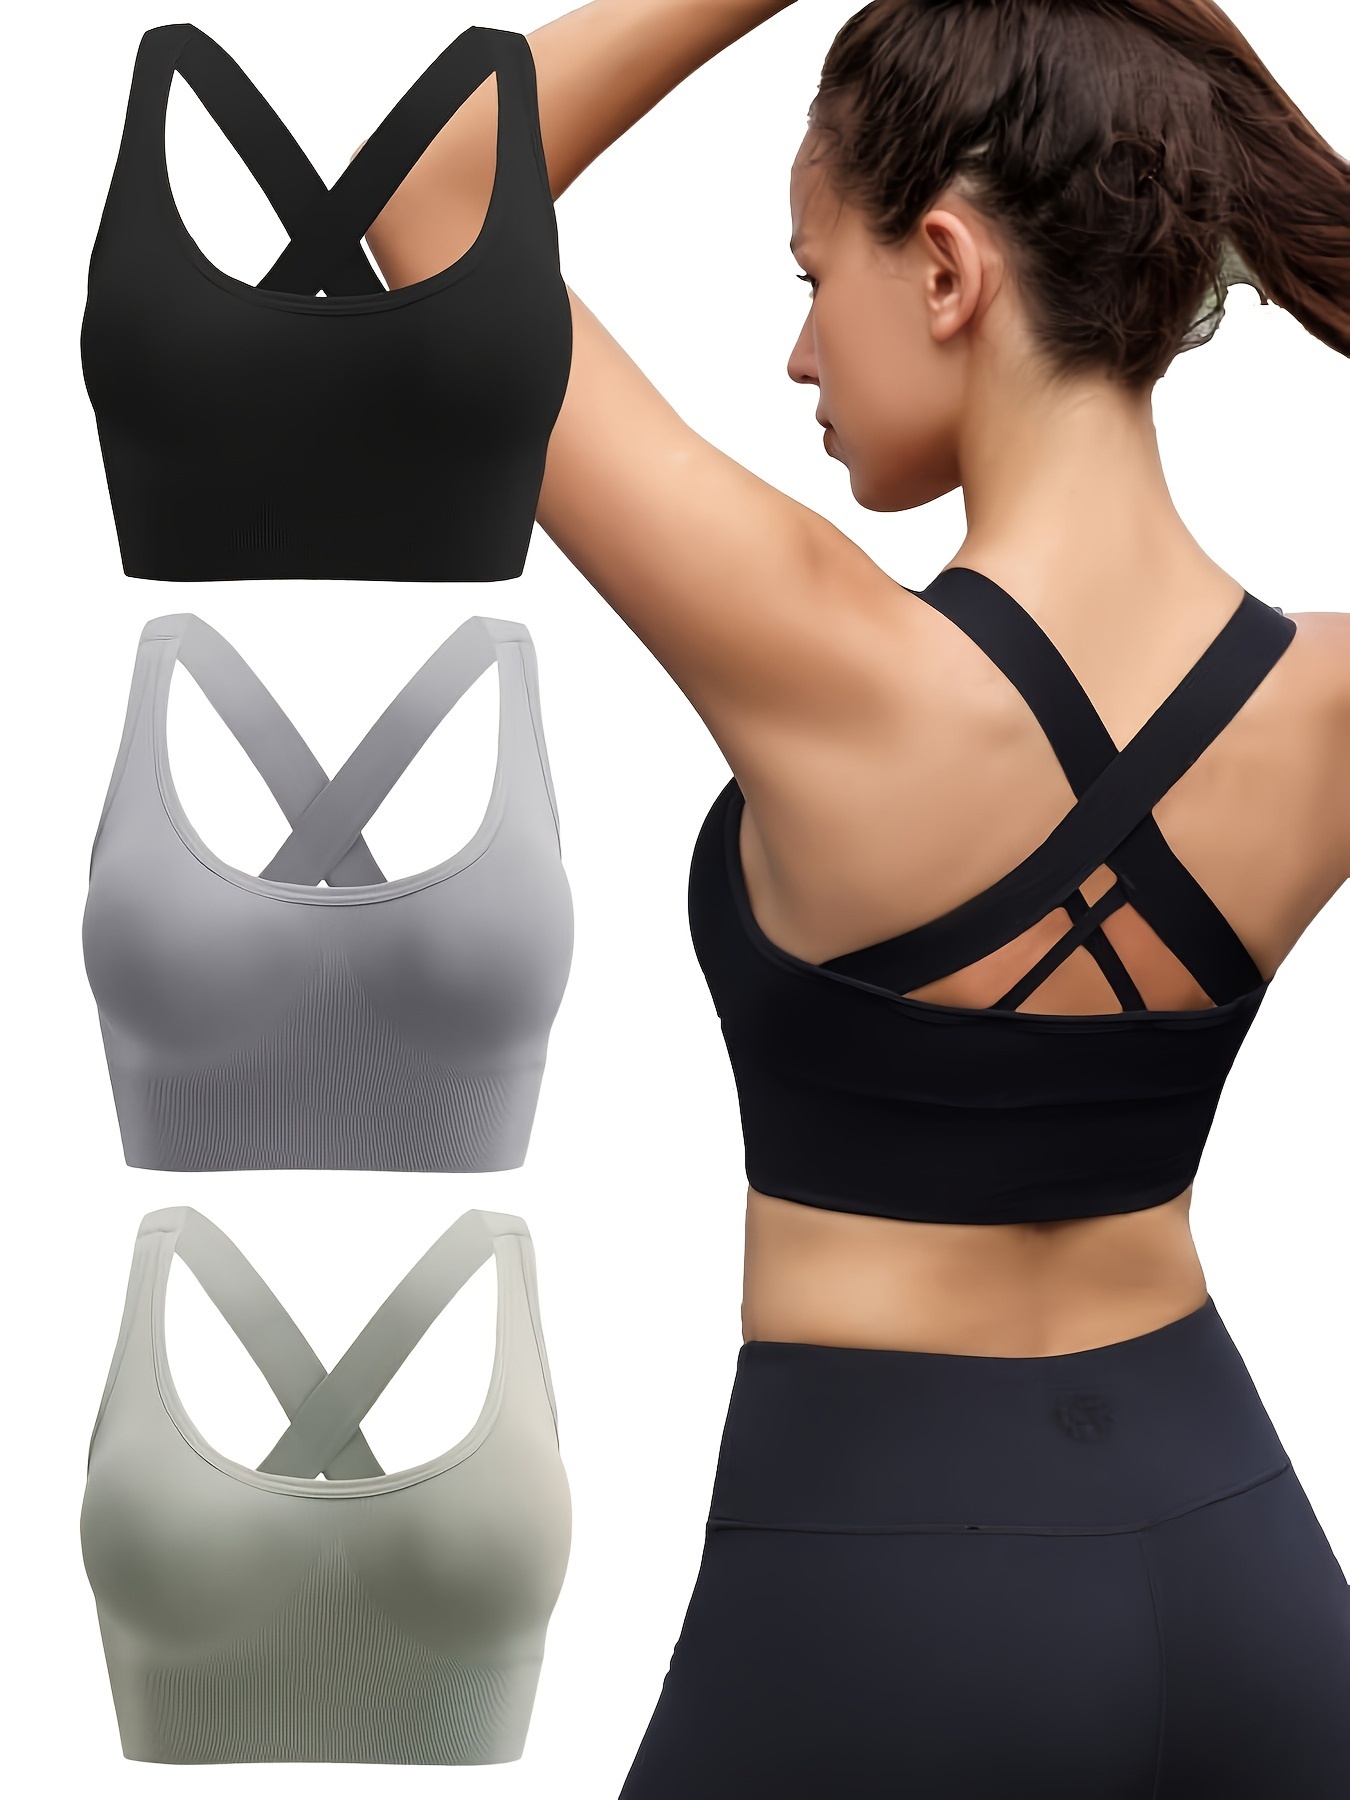 3pcs Solid Wireless Sports Bras Comfy & Breathable Running Workout Tank Bra  Women's Lingerie & Underwear 